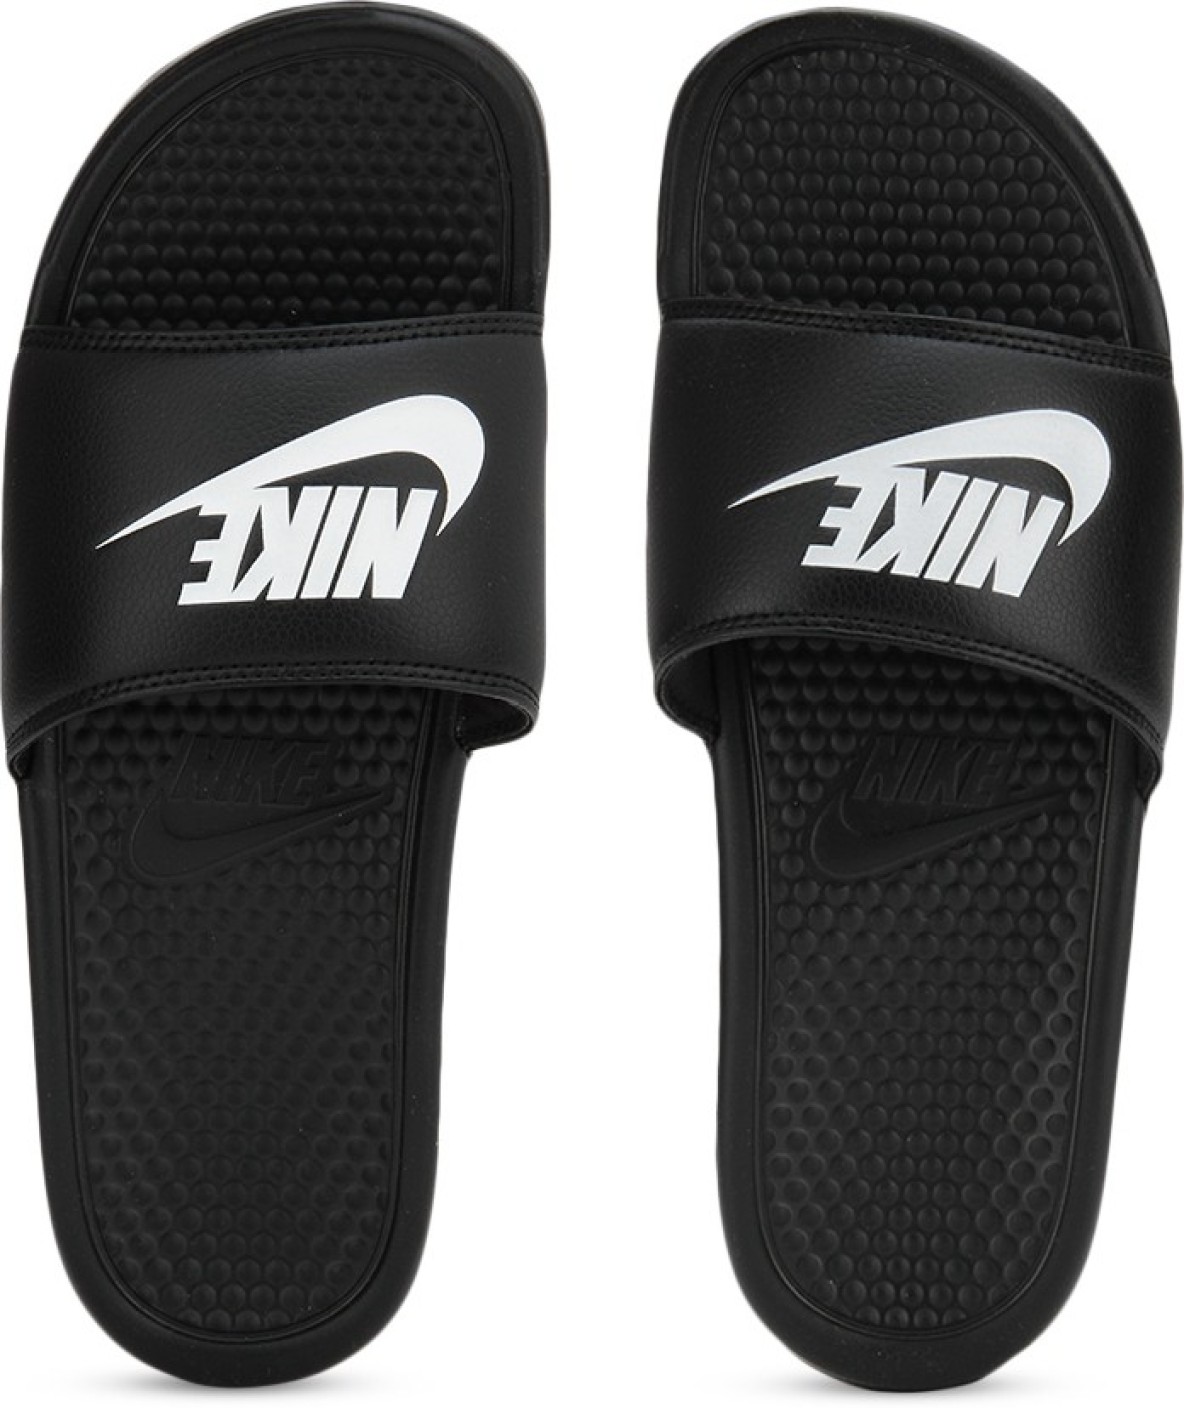 Nike BENASSI JDI Slides - Buy BLACK/WHITE NOIR/BLANC Color Nike BENASSI ...